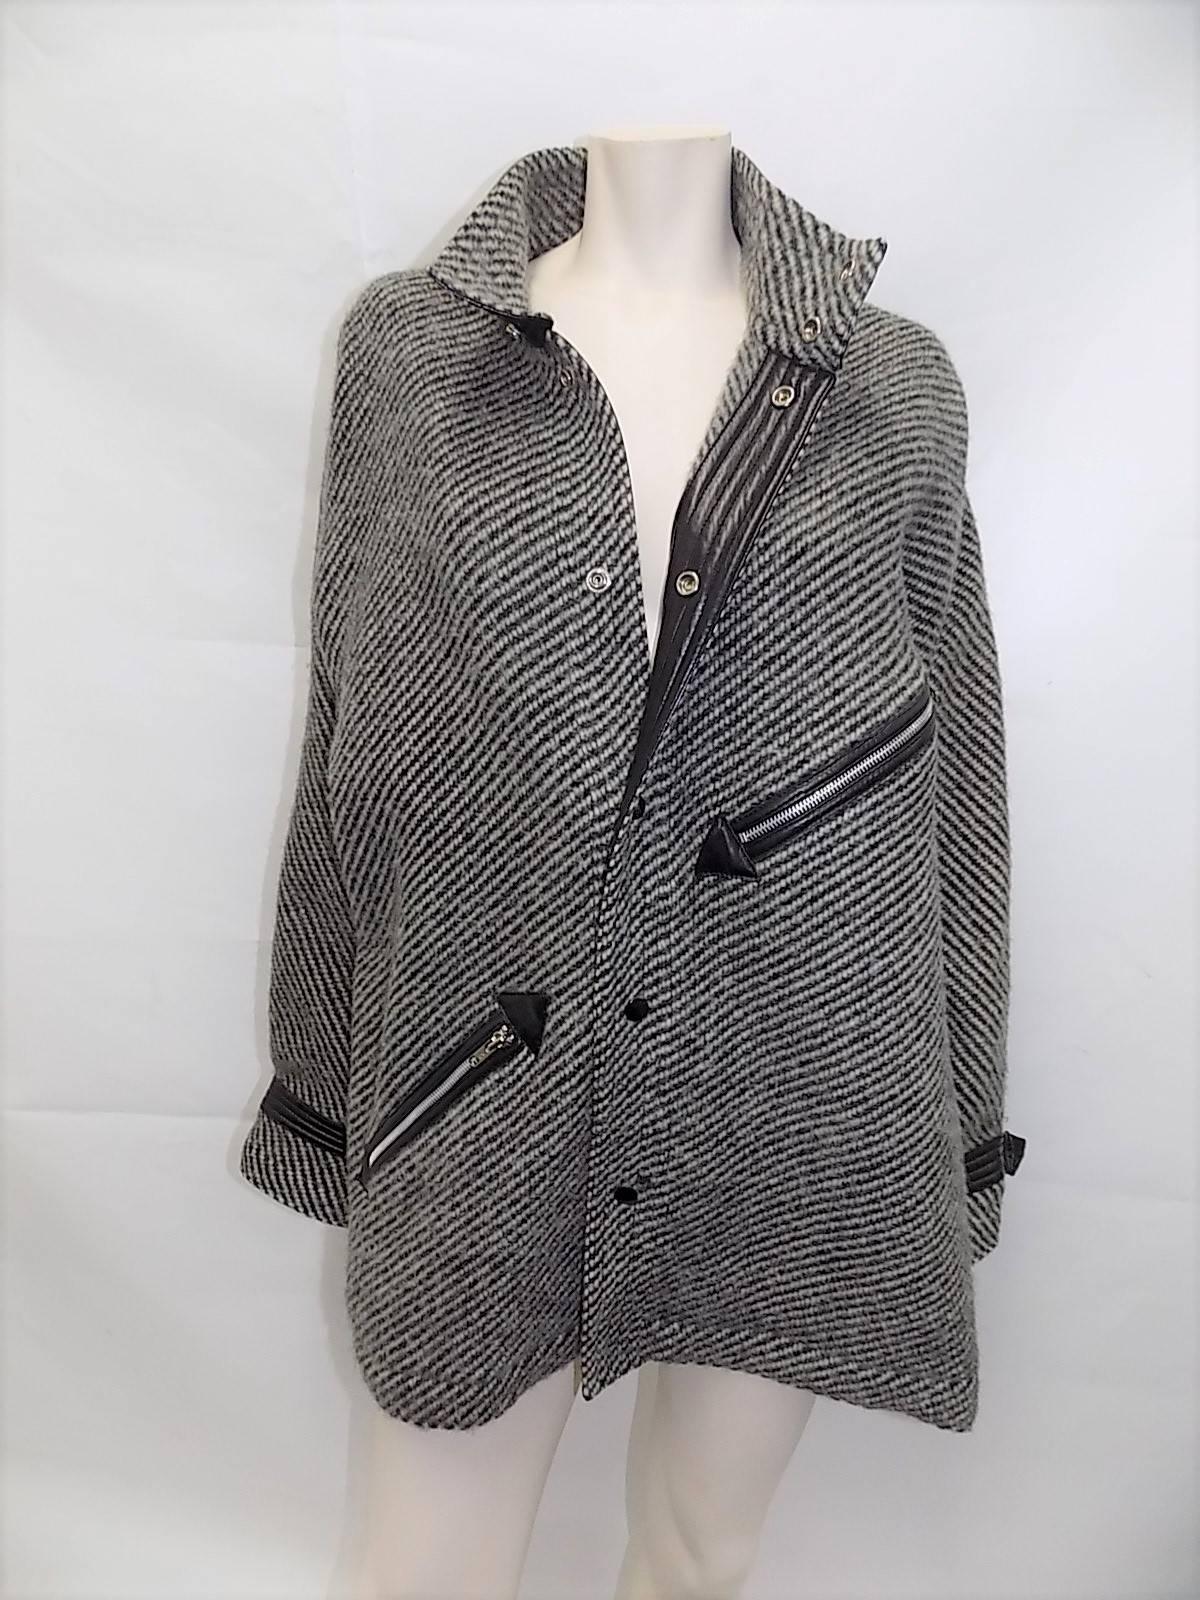 Jean-Charles de Castelbajac vintage  Arrow coat jacket with Leather Sleeves For Sale 1